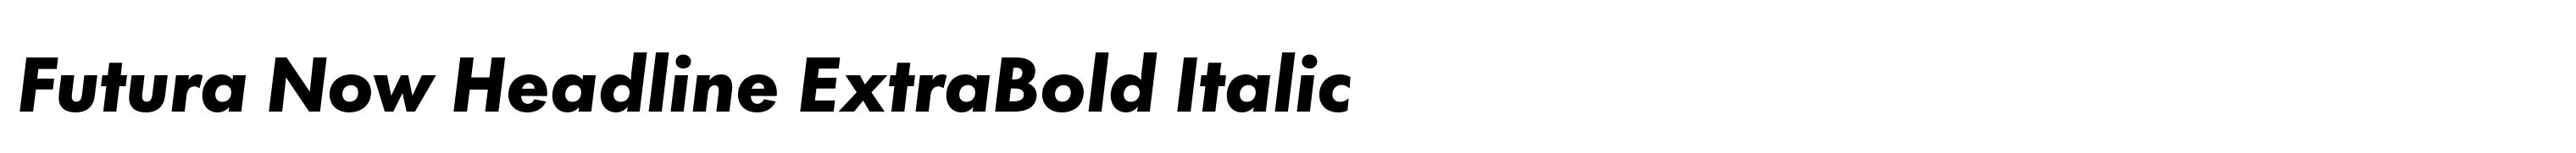 Futura Now Headline ExtraBold Italic